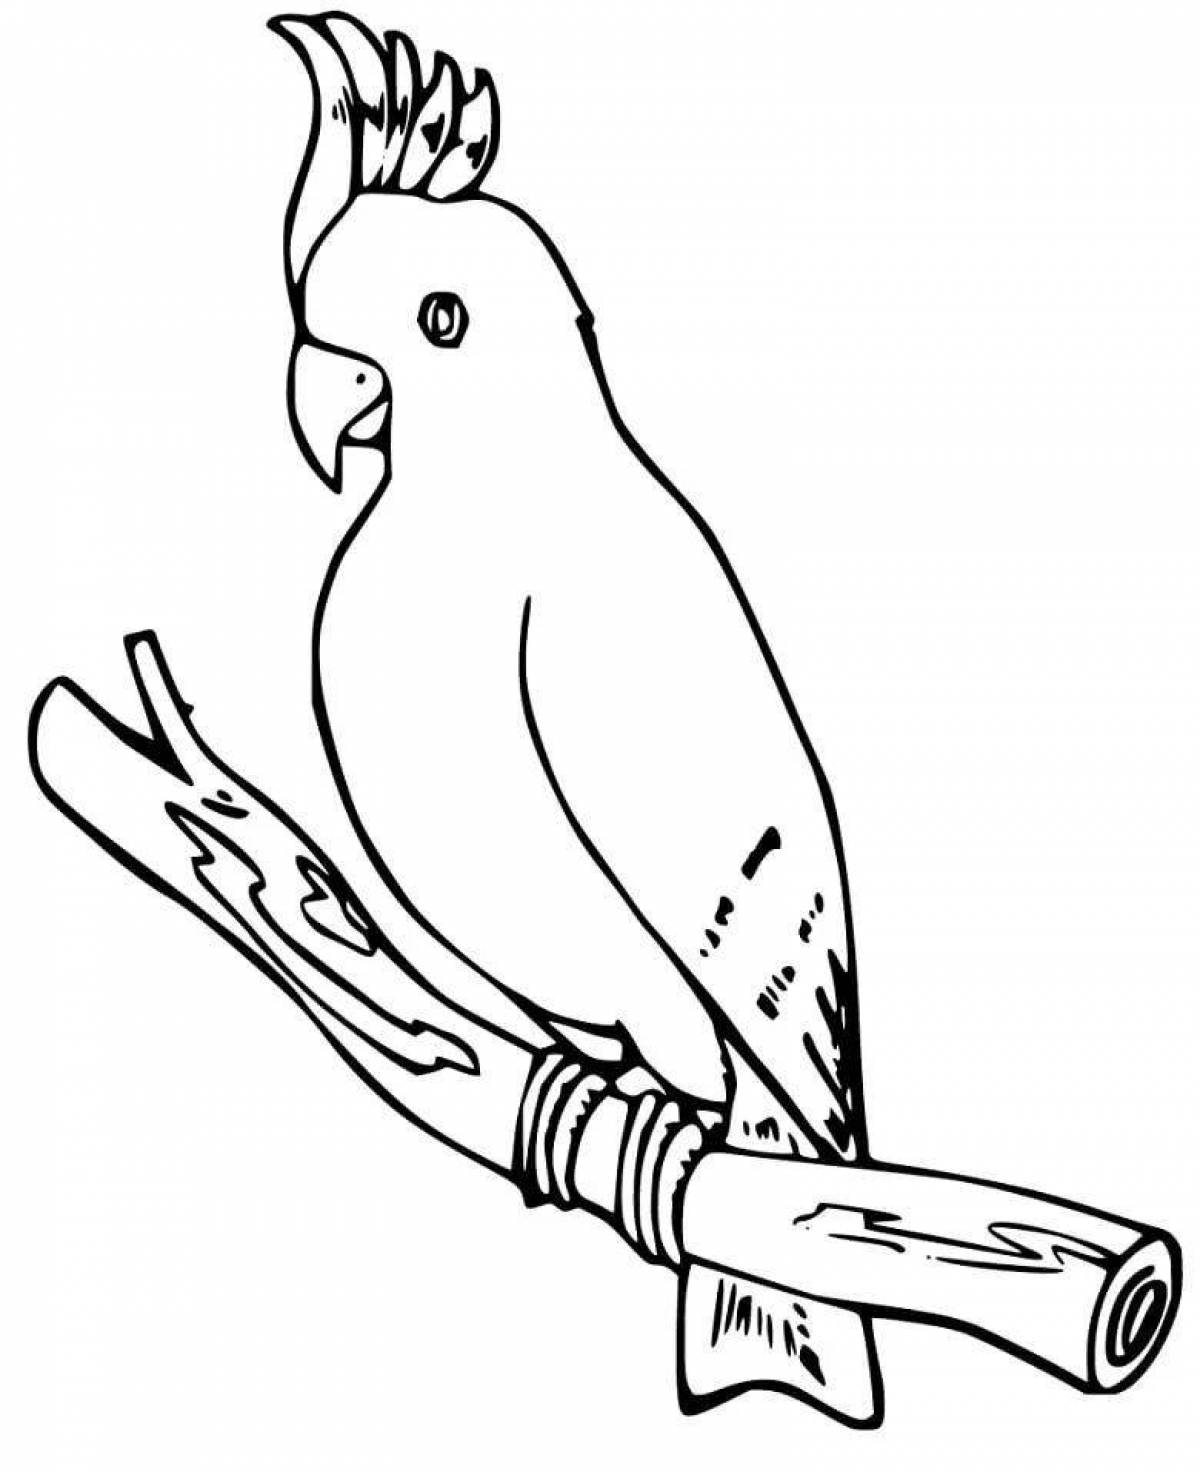 Strange parrot coloring pages for kids